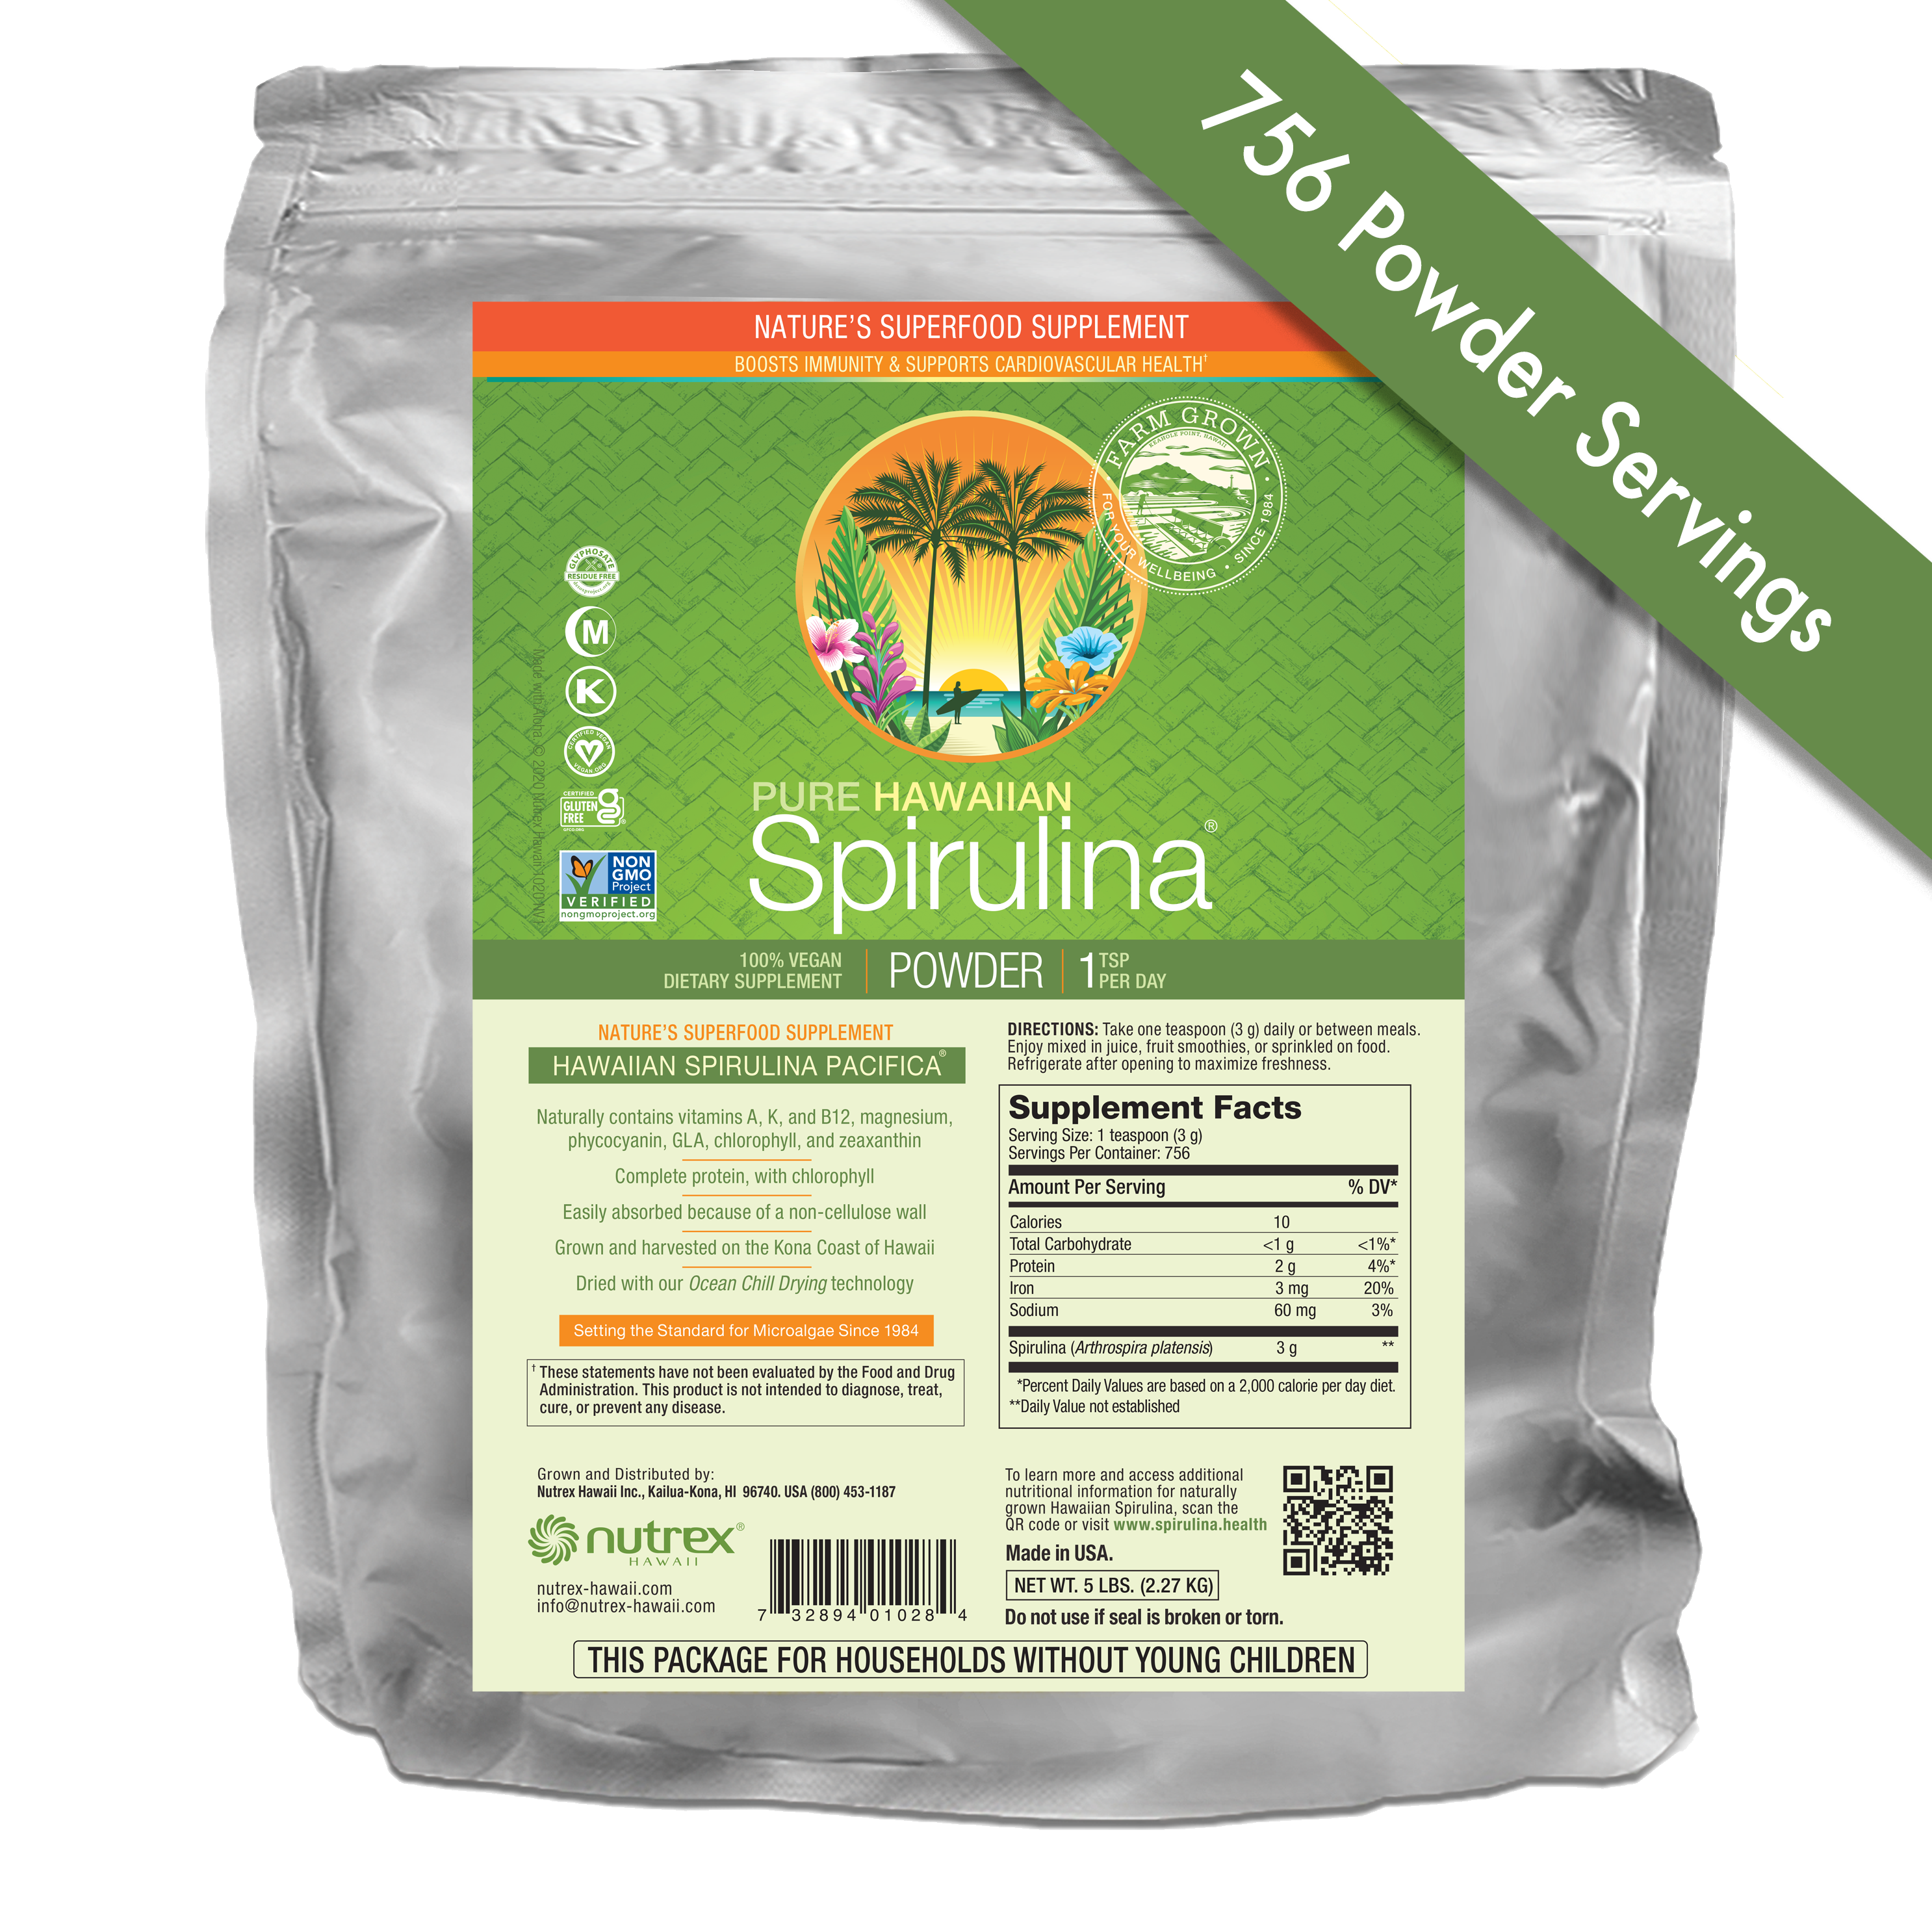 Buy Spirulina online on